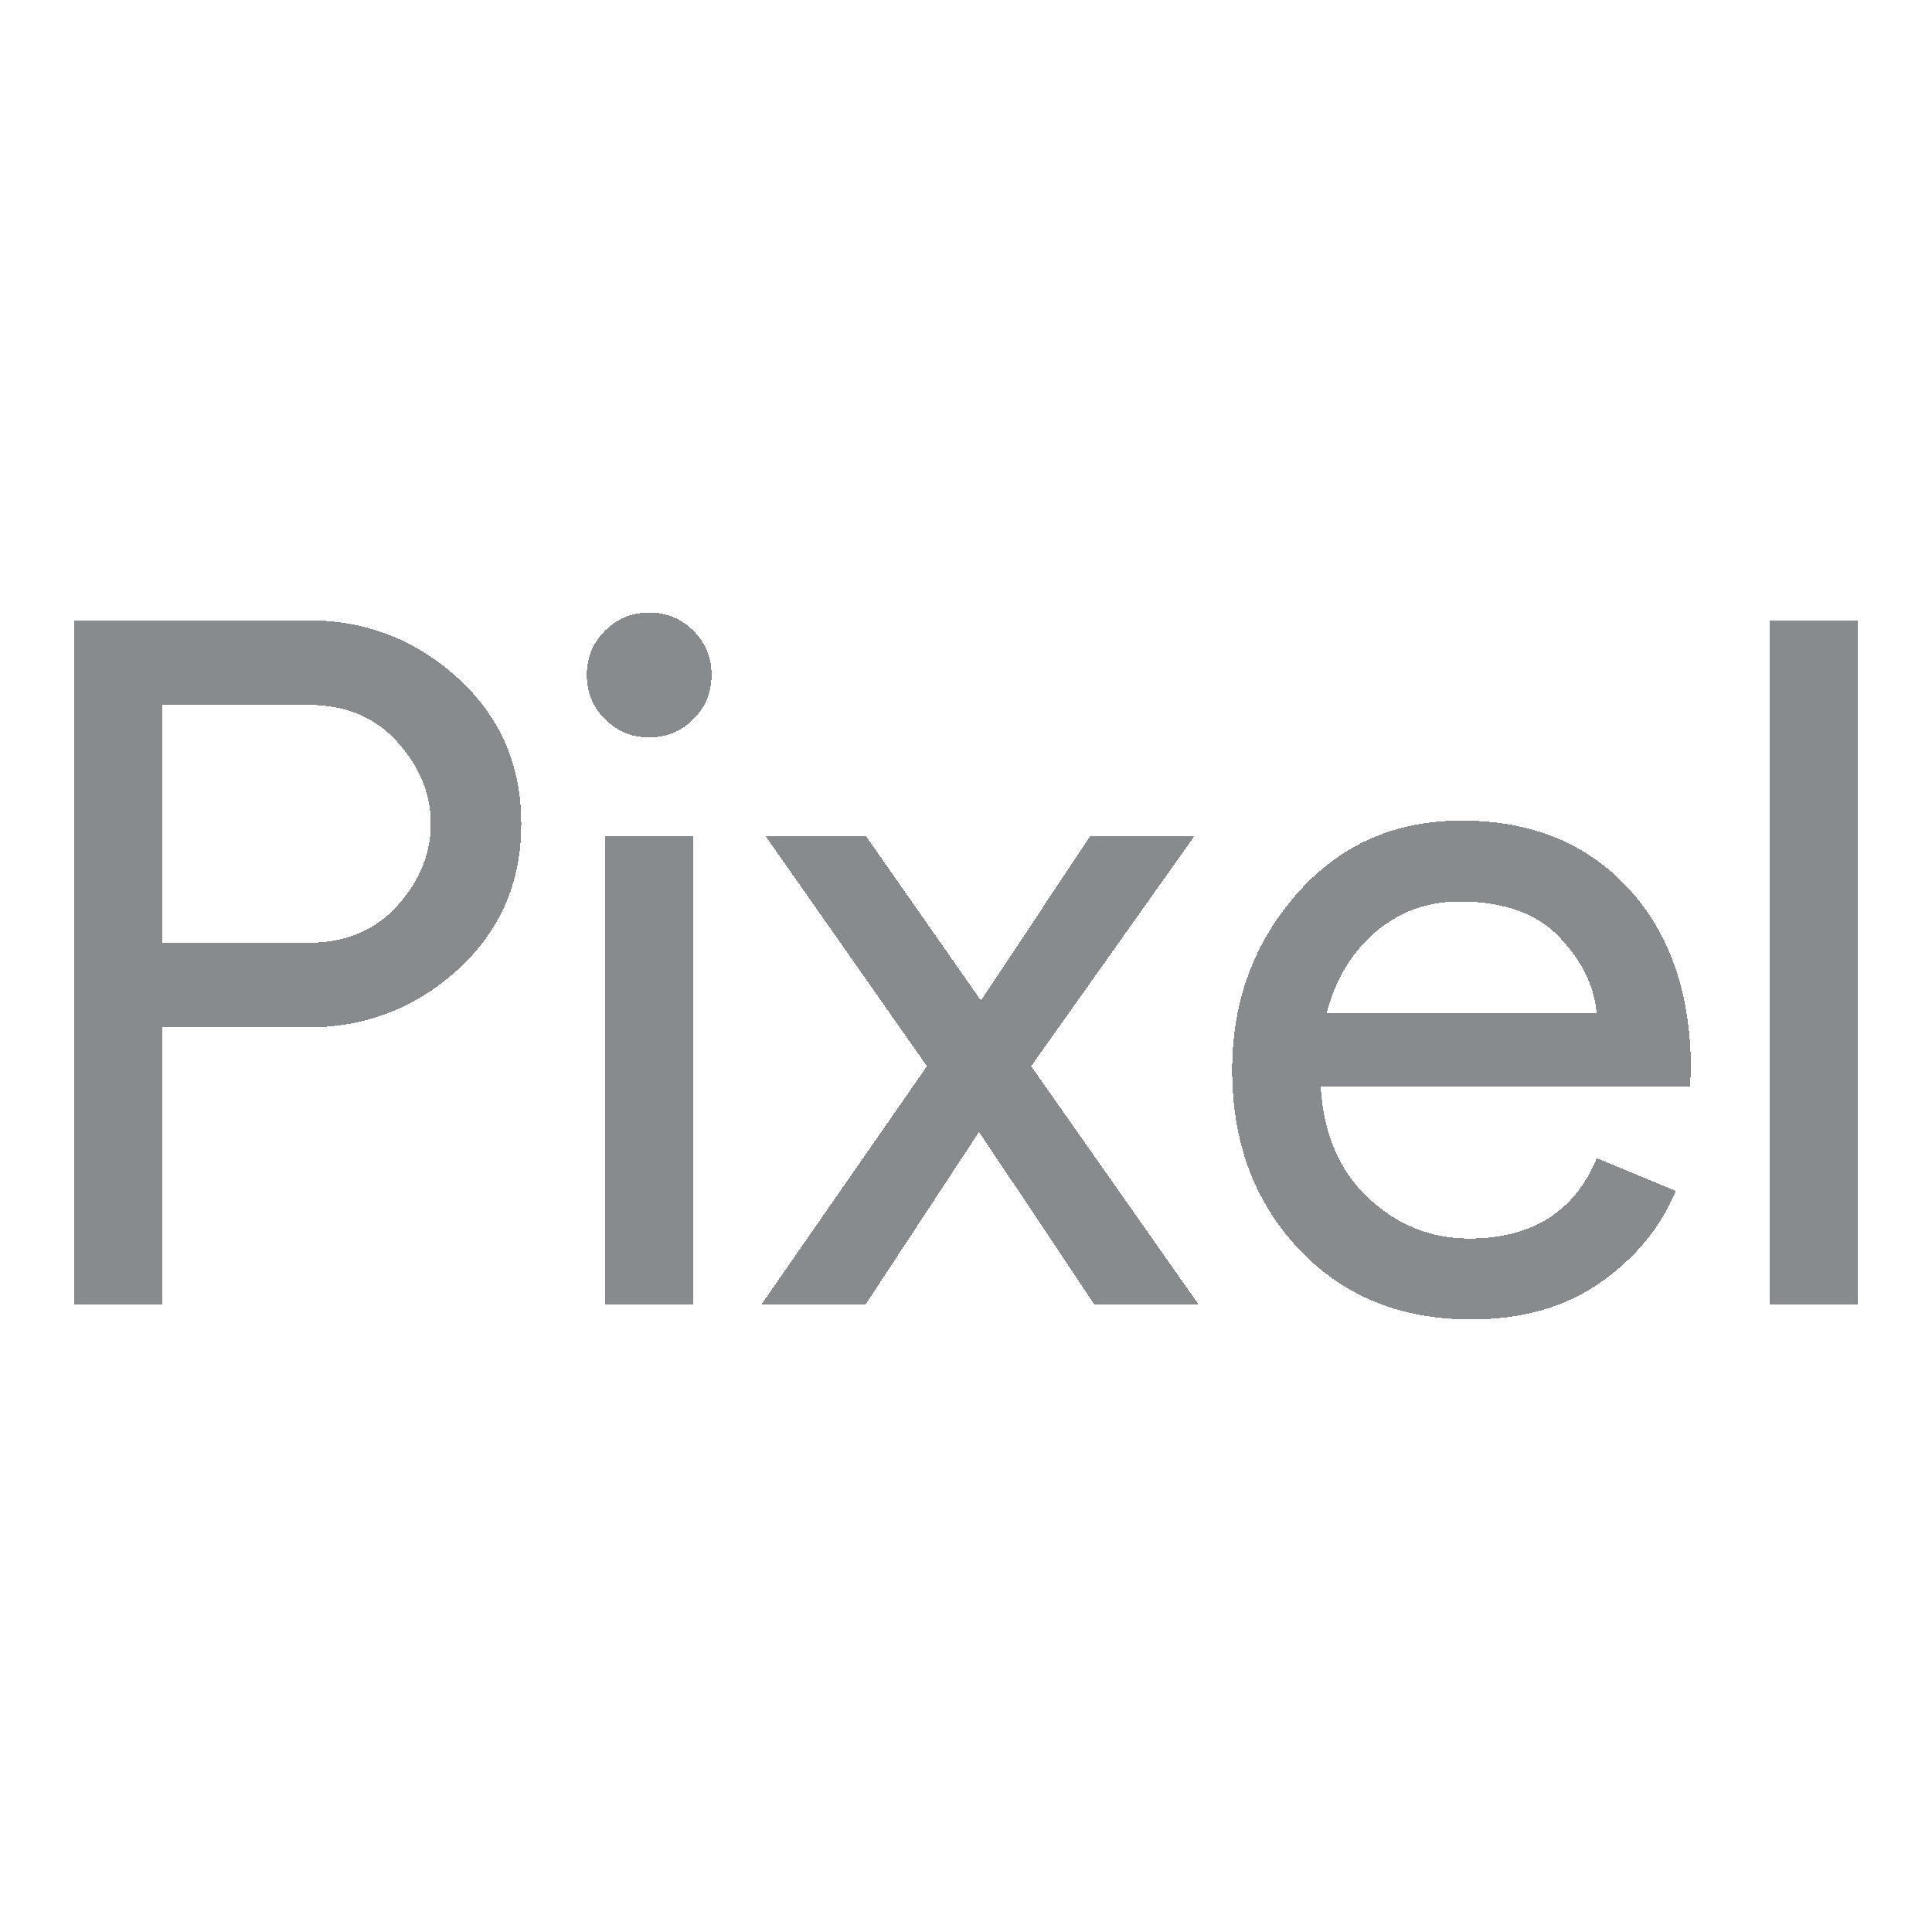 Google Pixel Logo Transparent Image